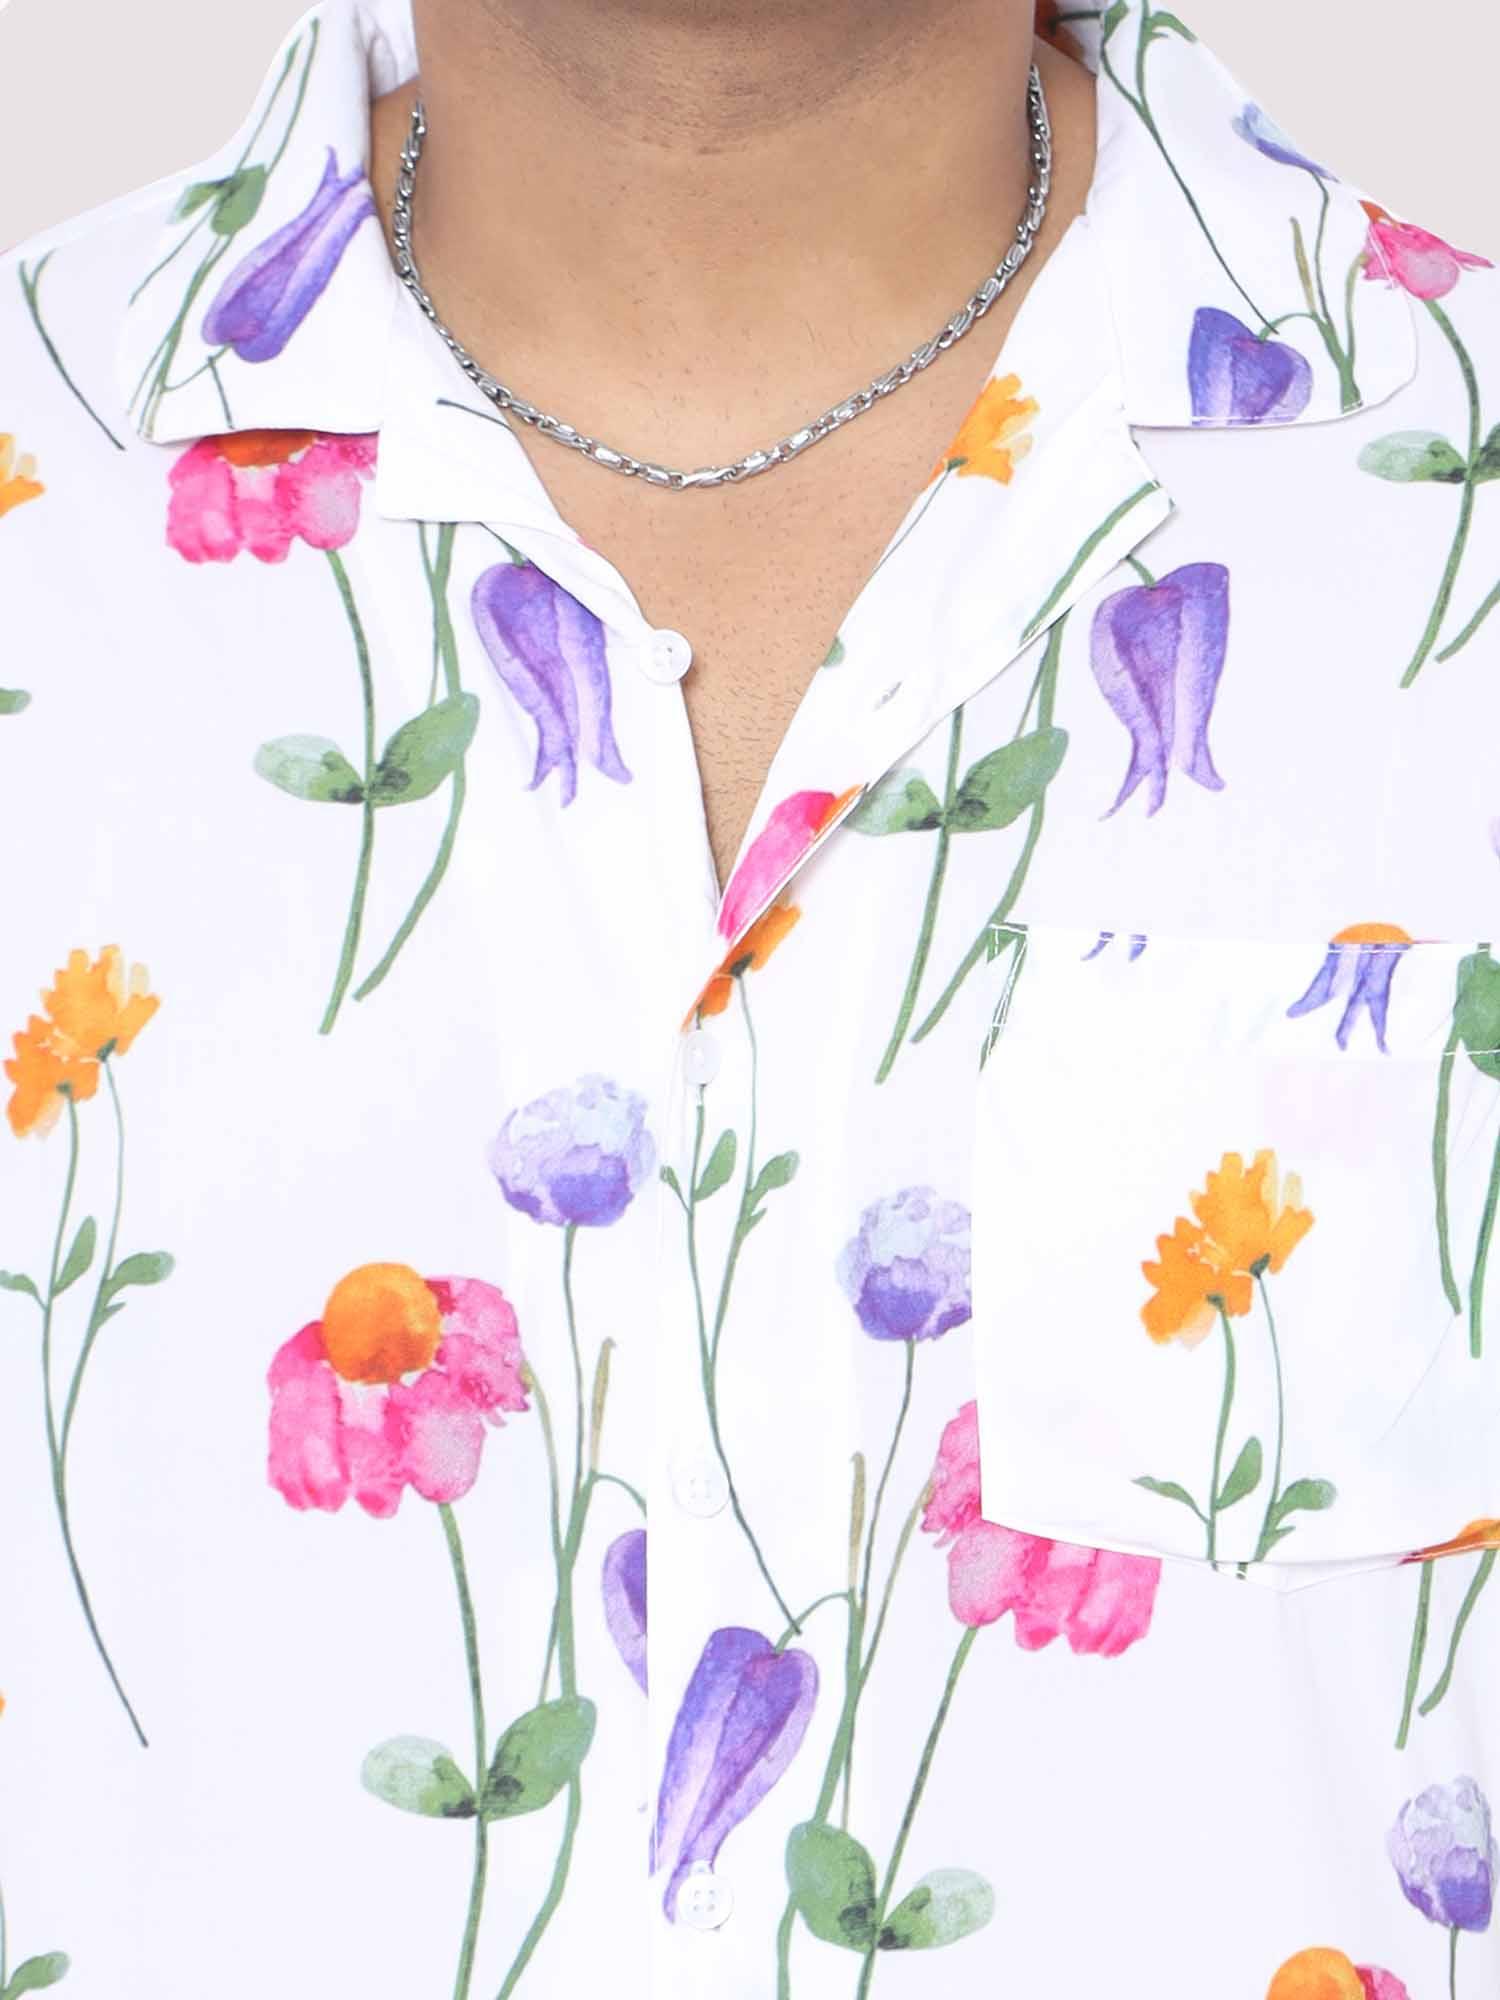 Men Plus Size Daisy Flowers Printed Half Sleeve Co-Ords - Guniaa Fashions